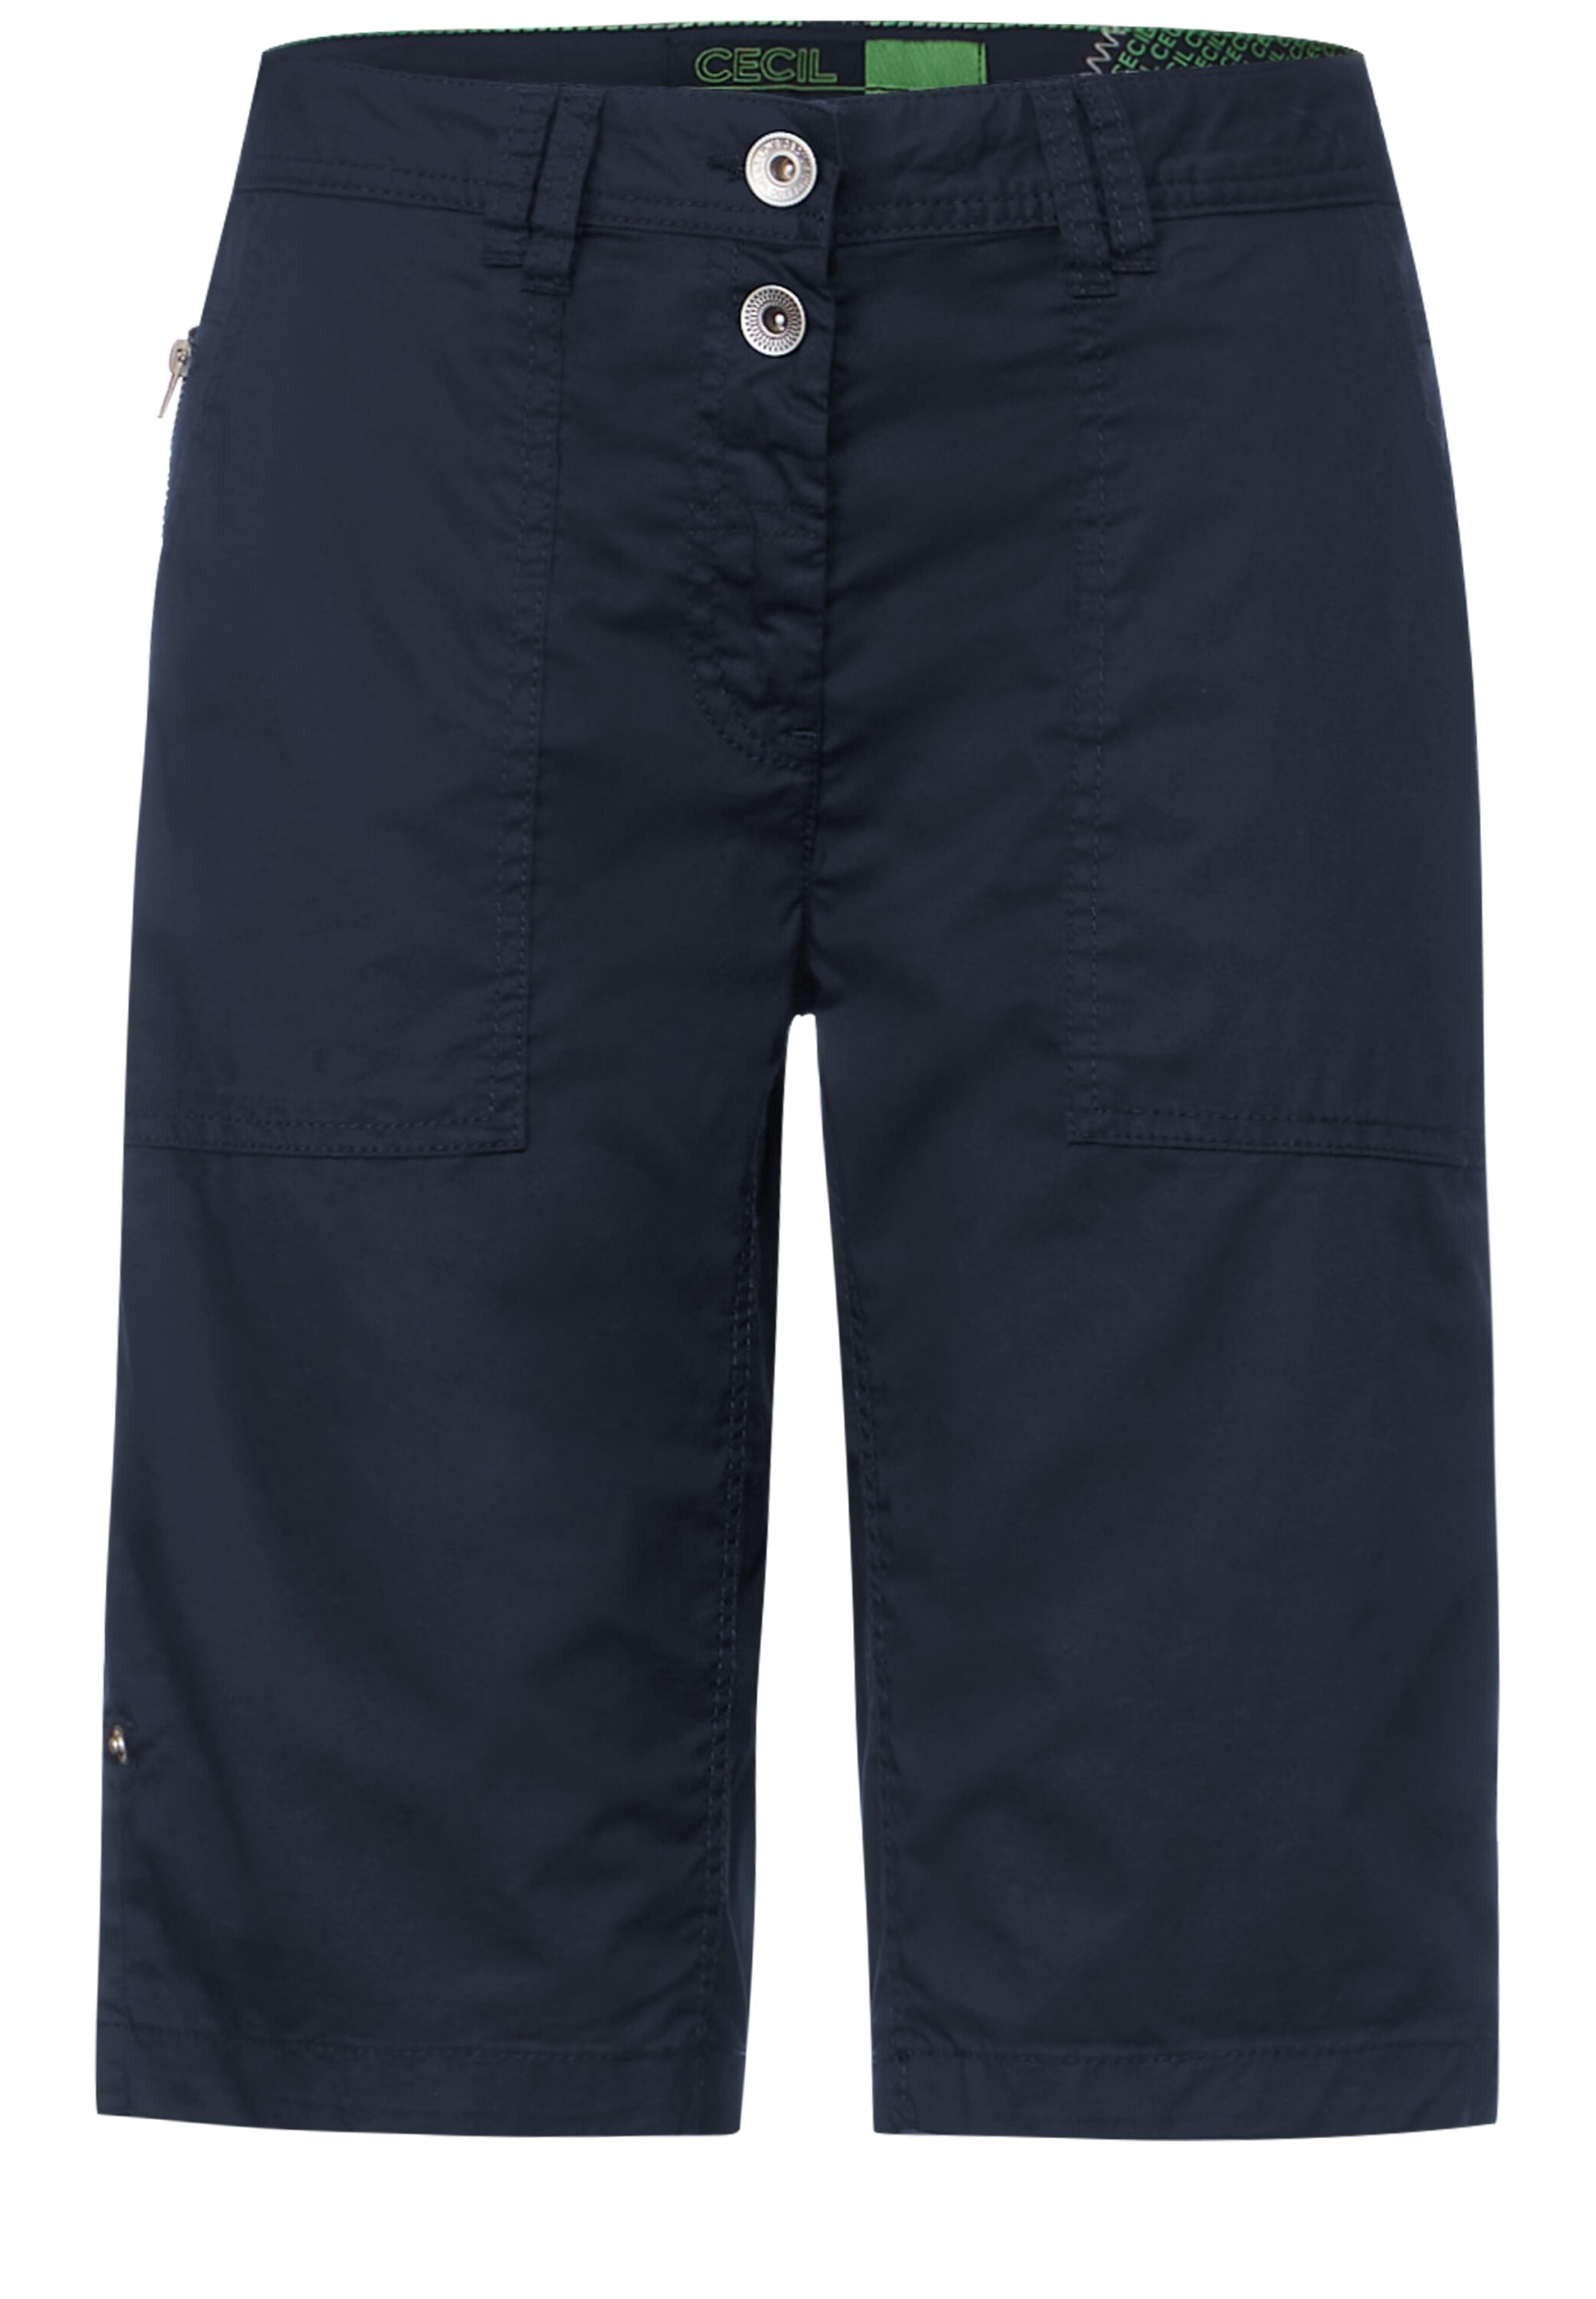 Style NOS 33 Shorts deep | B376478-10128-33 | | New blue York